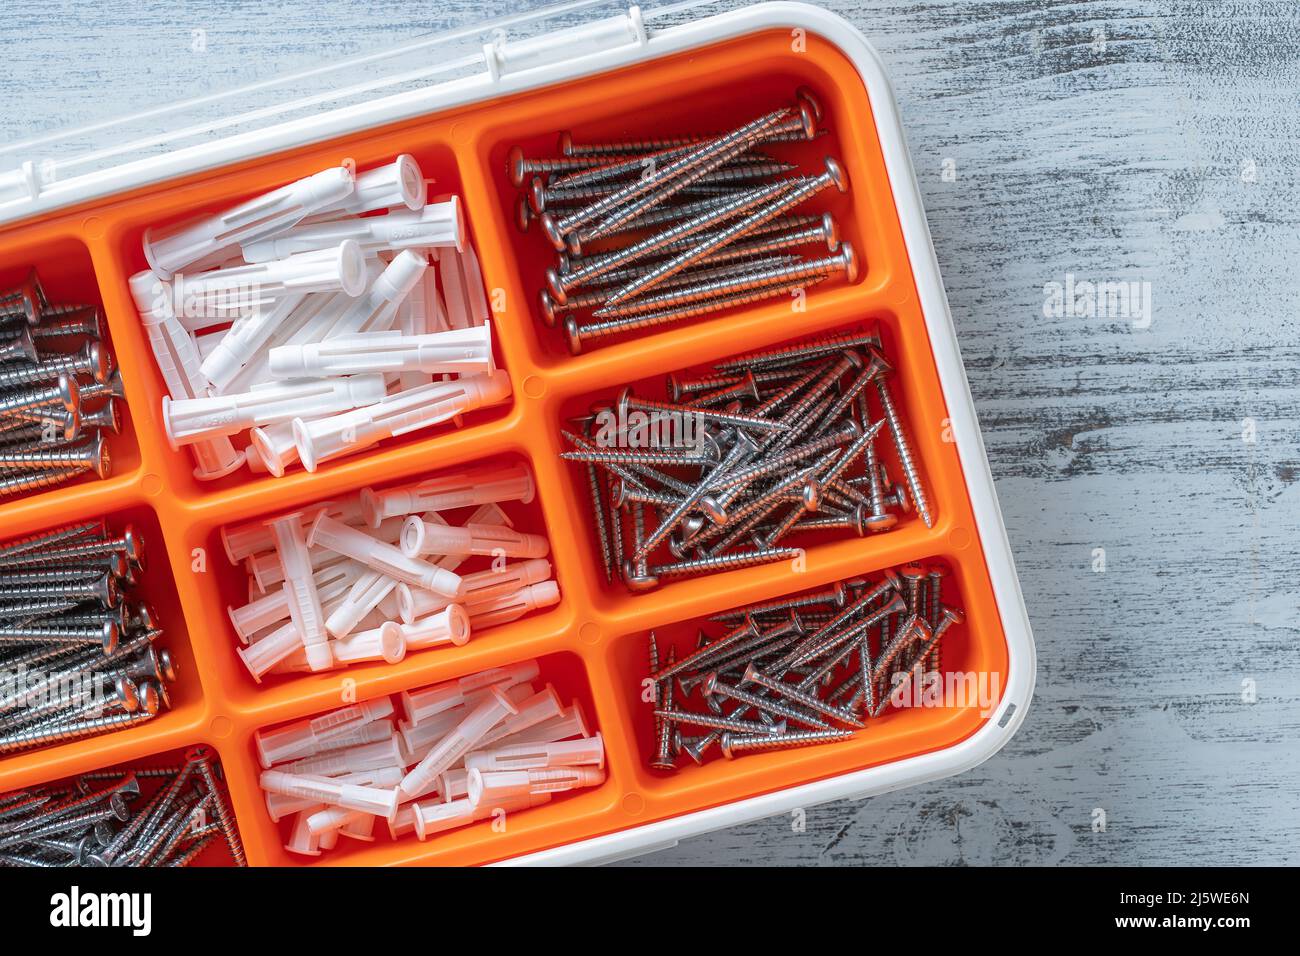 Plastic box with screws -Fotos und -Bildmaterial in hoher Auflösung - Seite  2 - Alamy